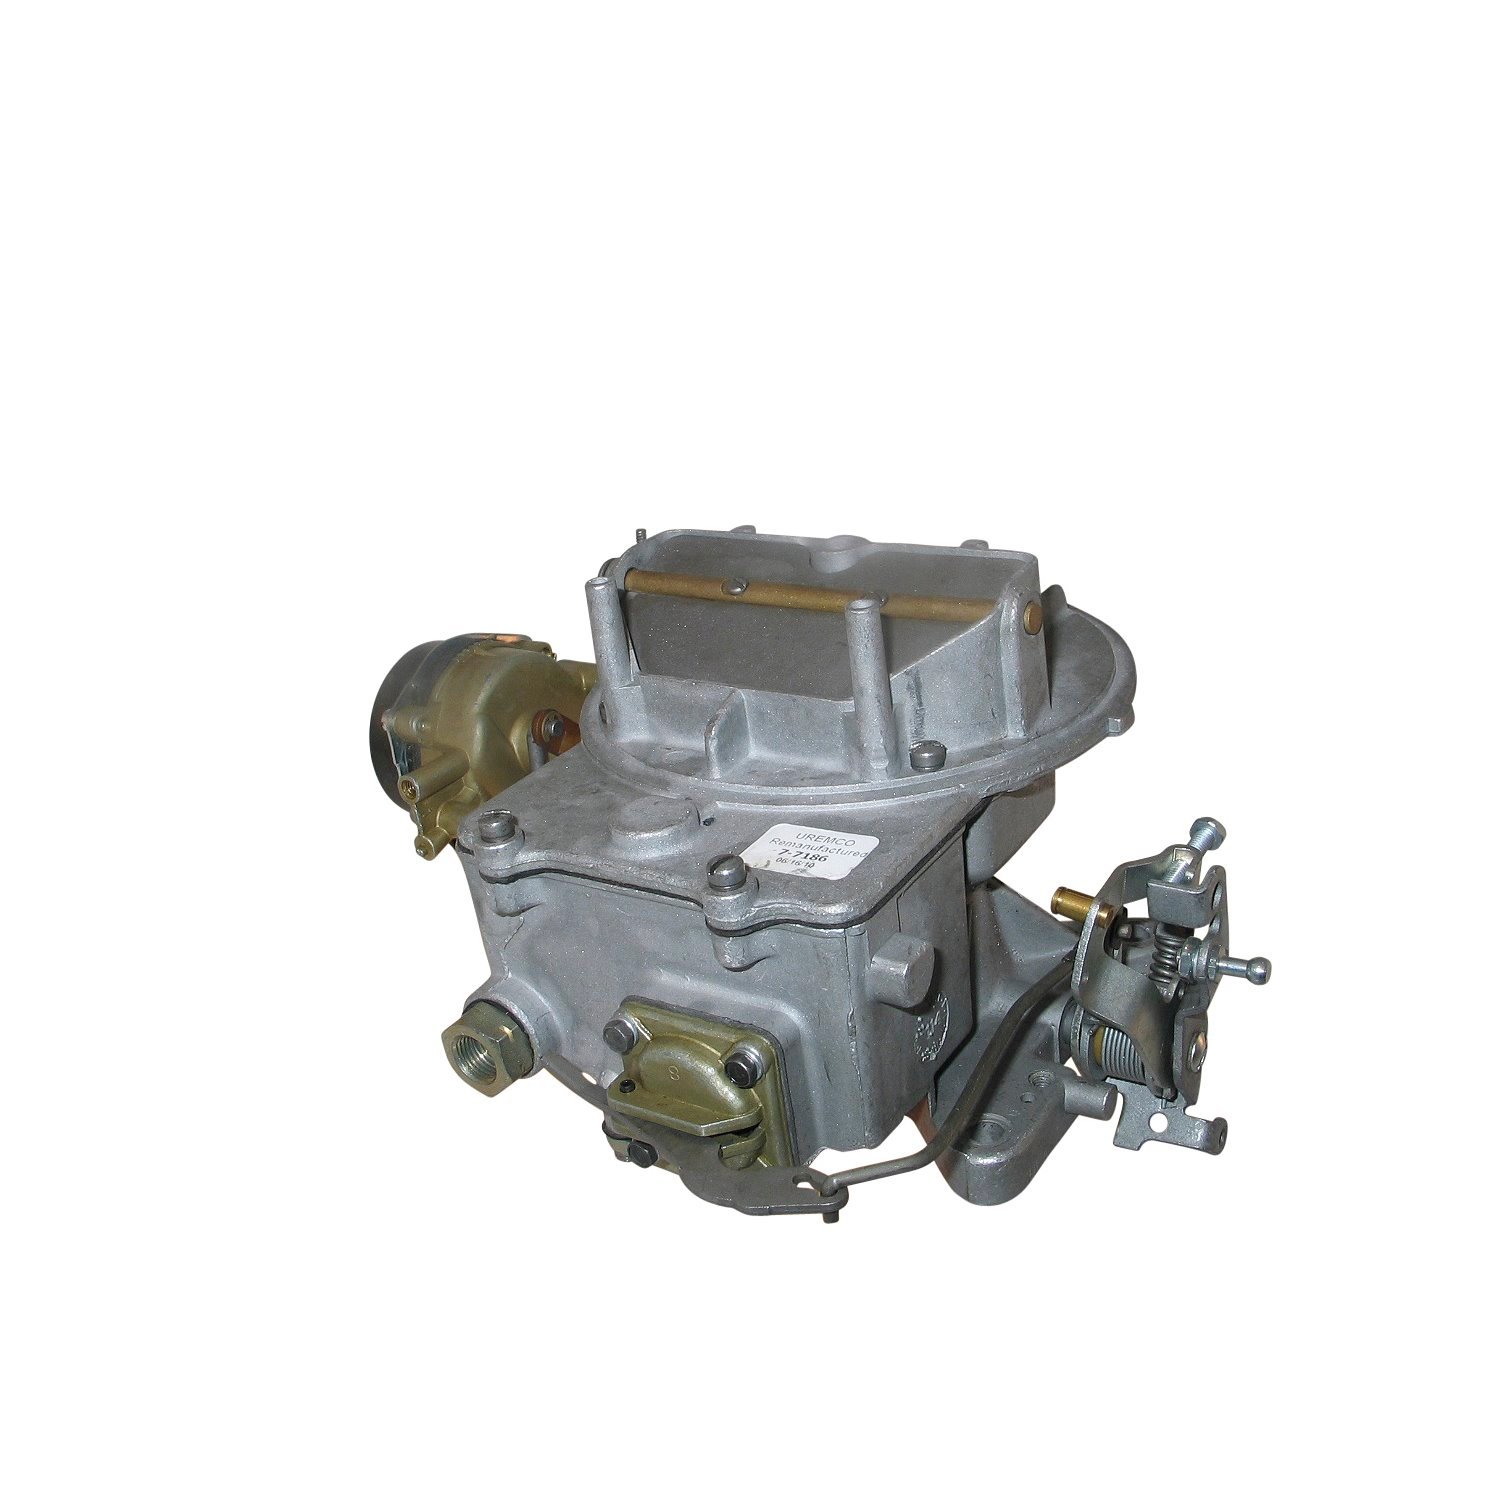 7-7186 Motorcraft Remanufactured Carburetor, 2100A-Style